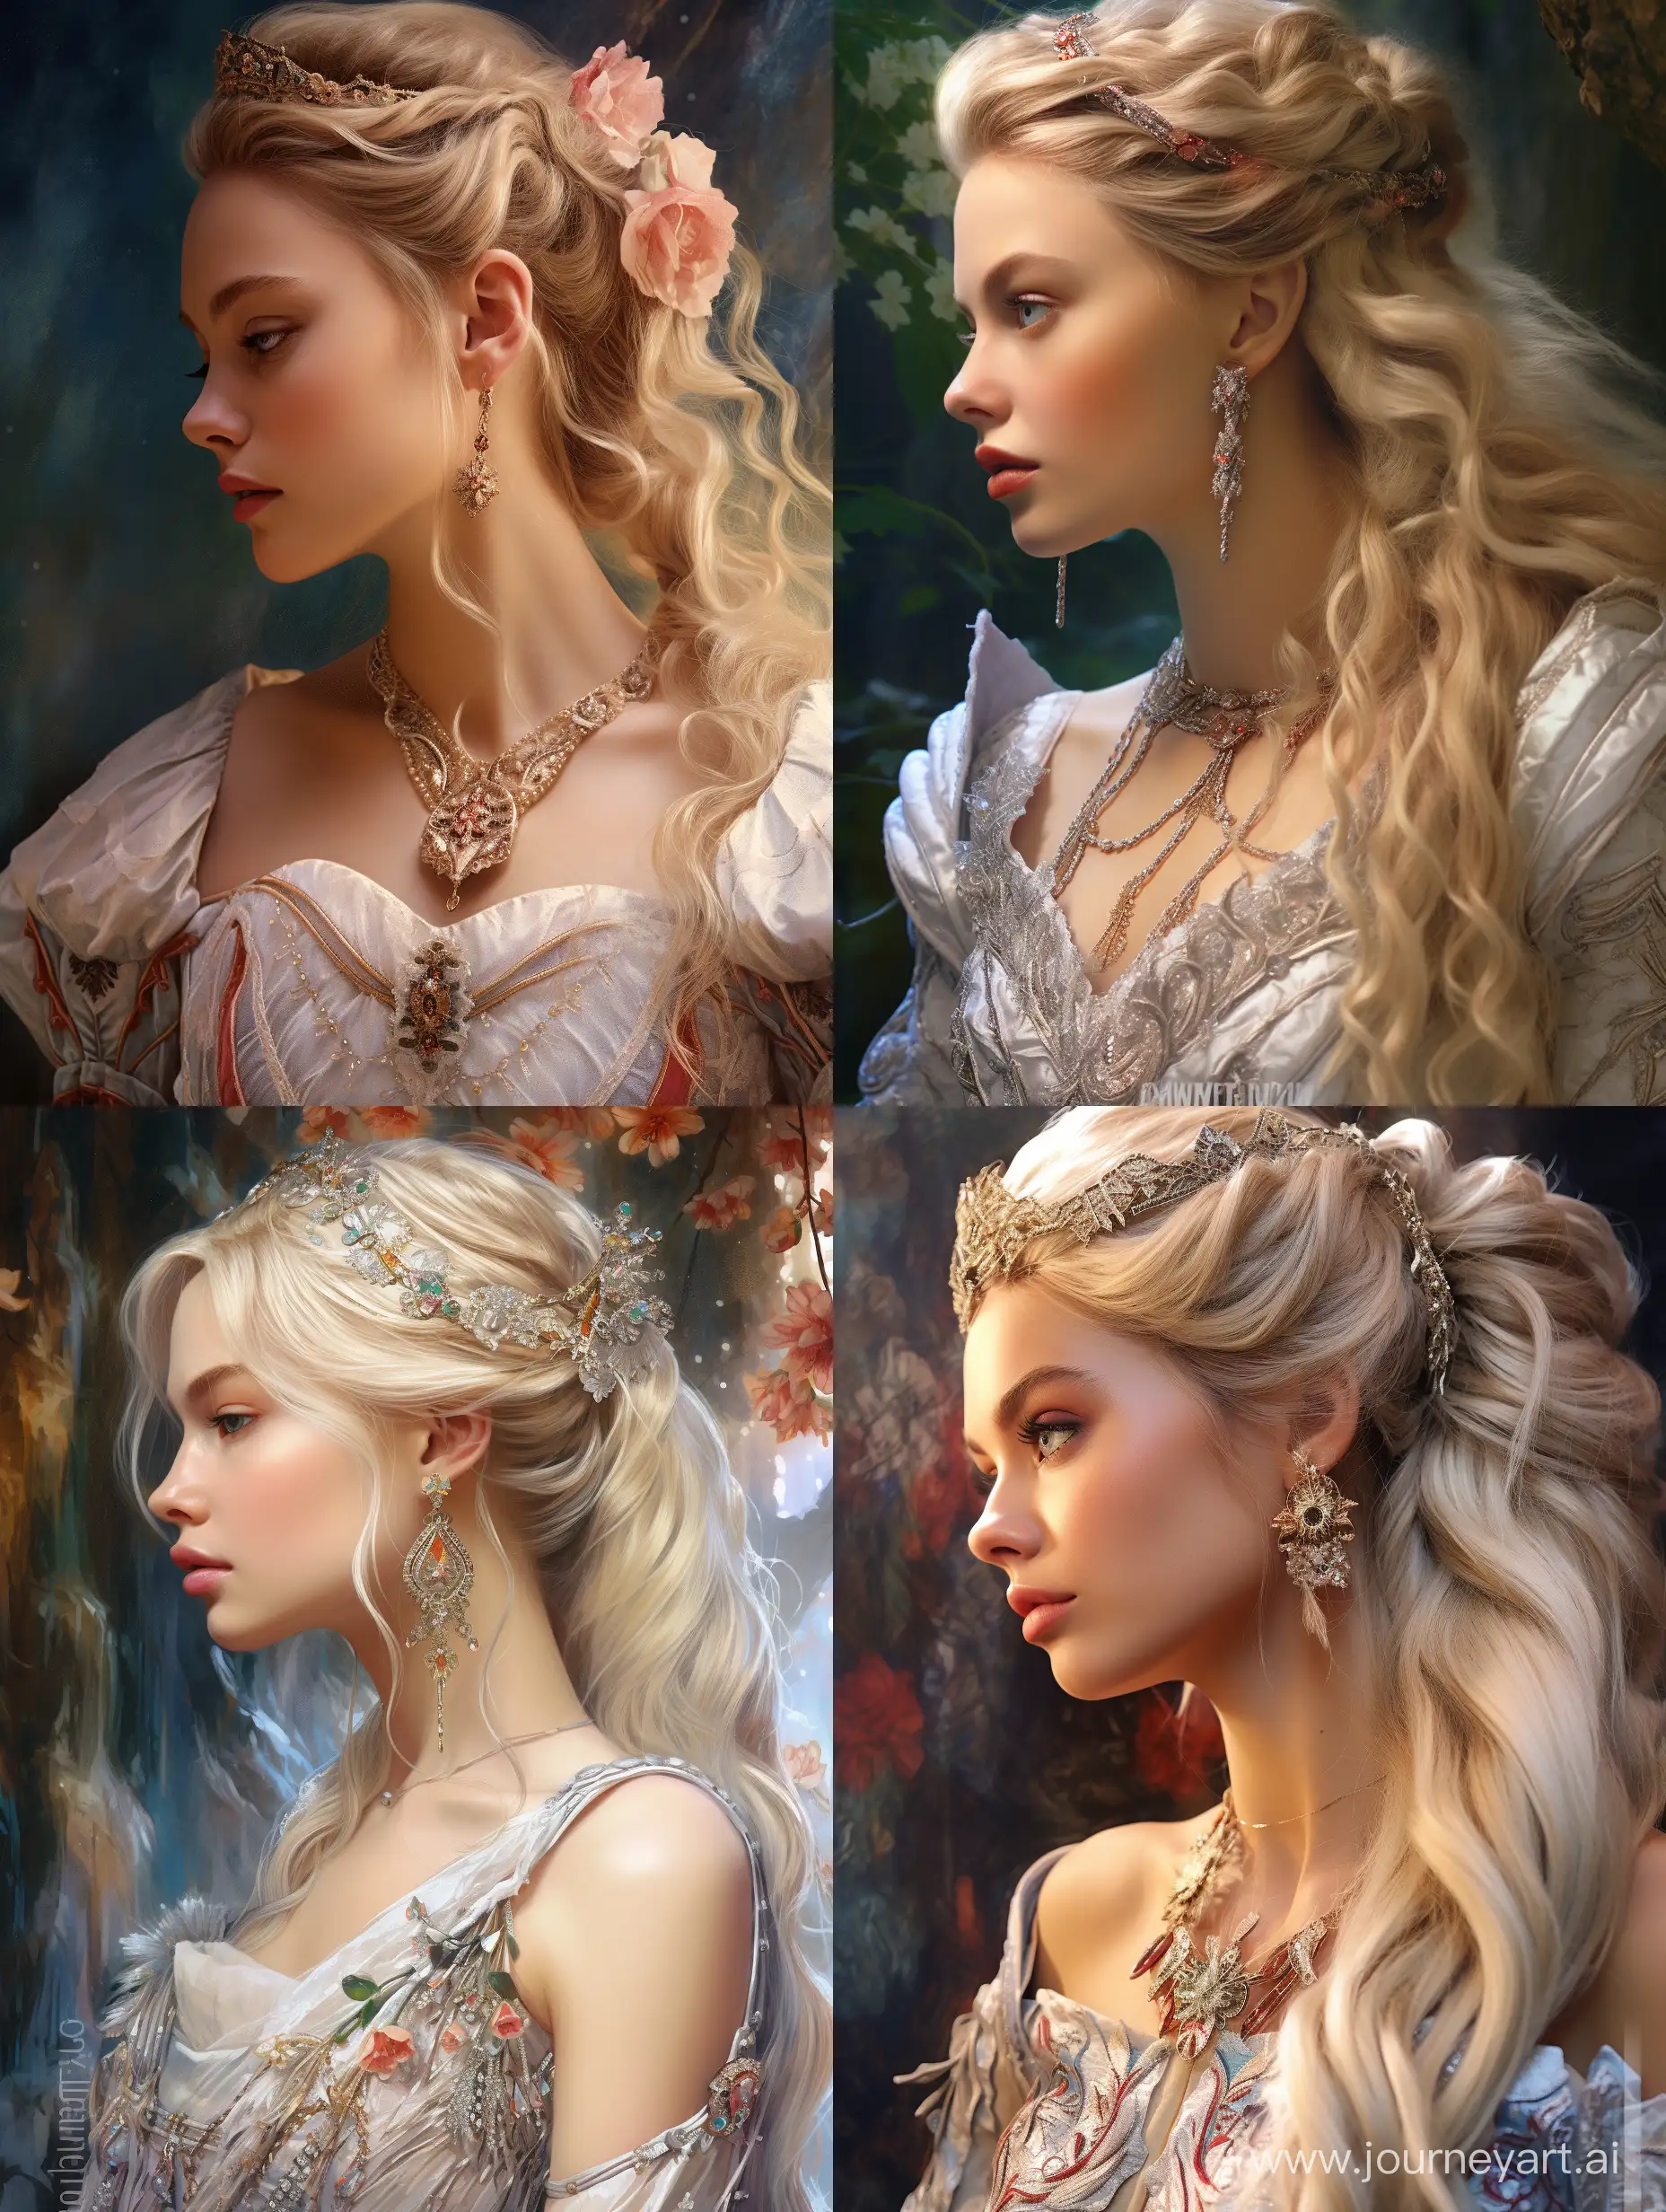 Captivating-BlondeHaired-Enchantress-in-Elden-RingStyle-Fantasy-Portrait